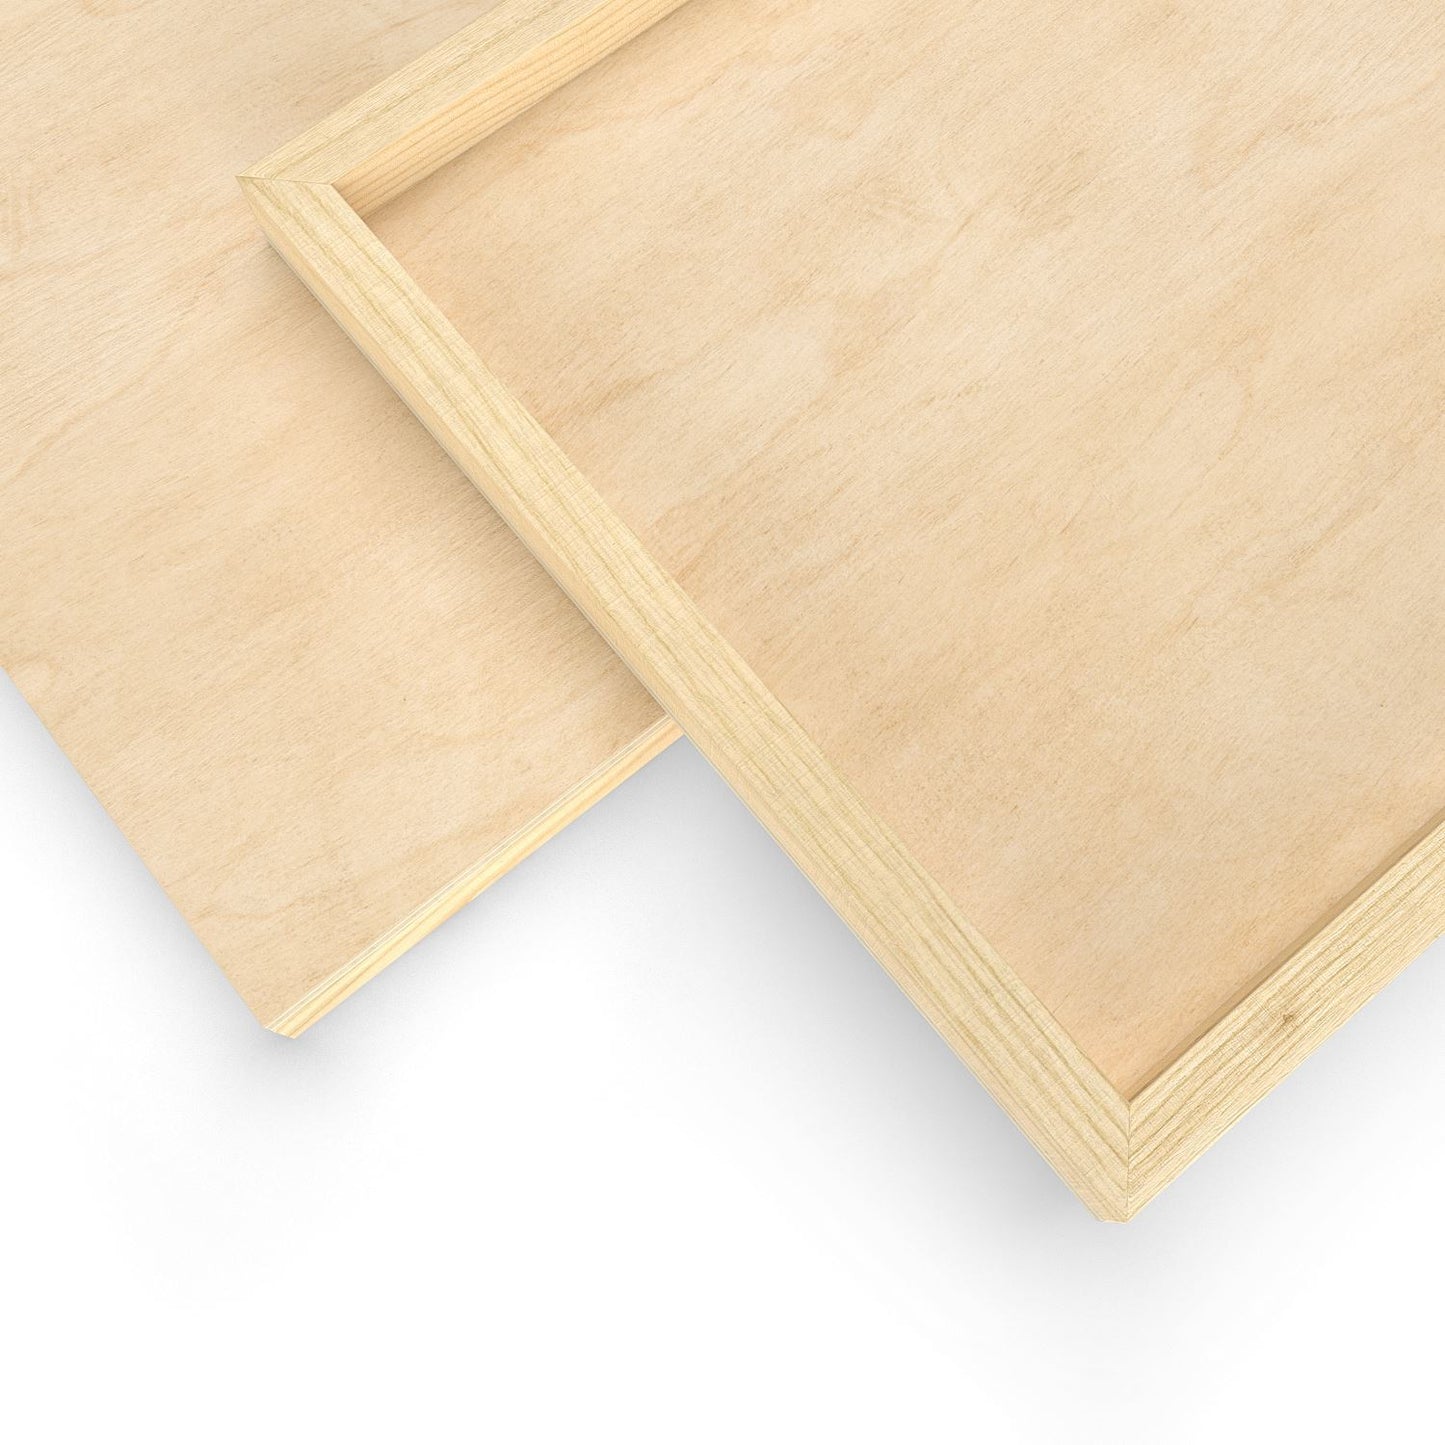 Wood Panels, 10" x 10" - Pack of 5